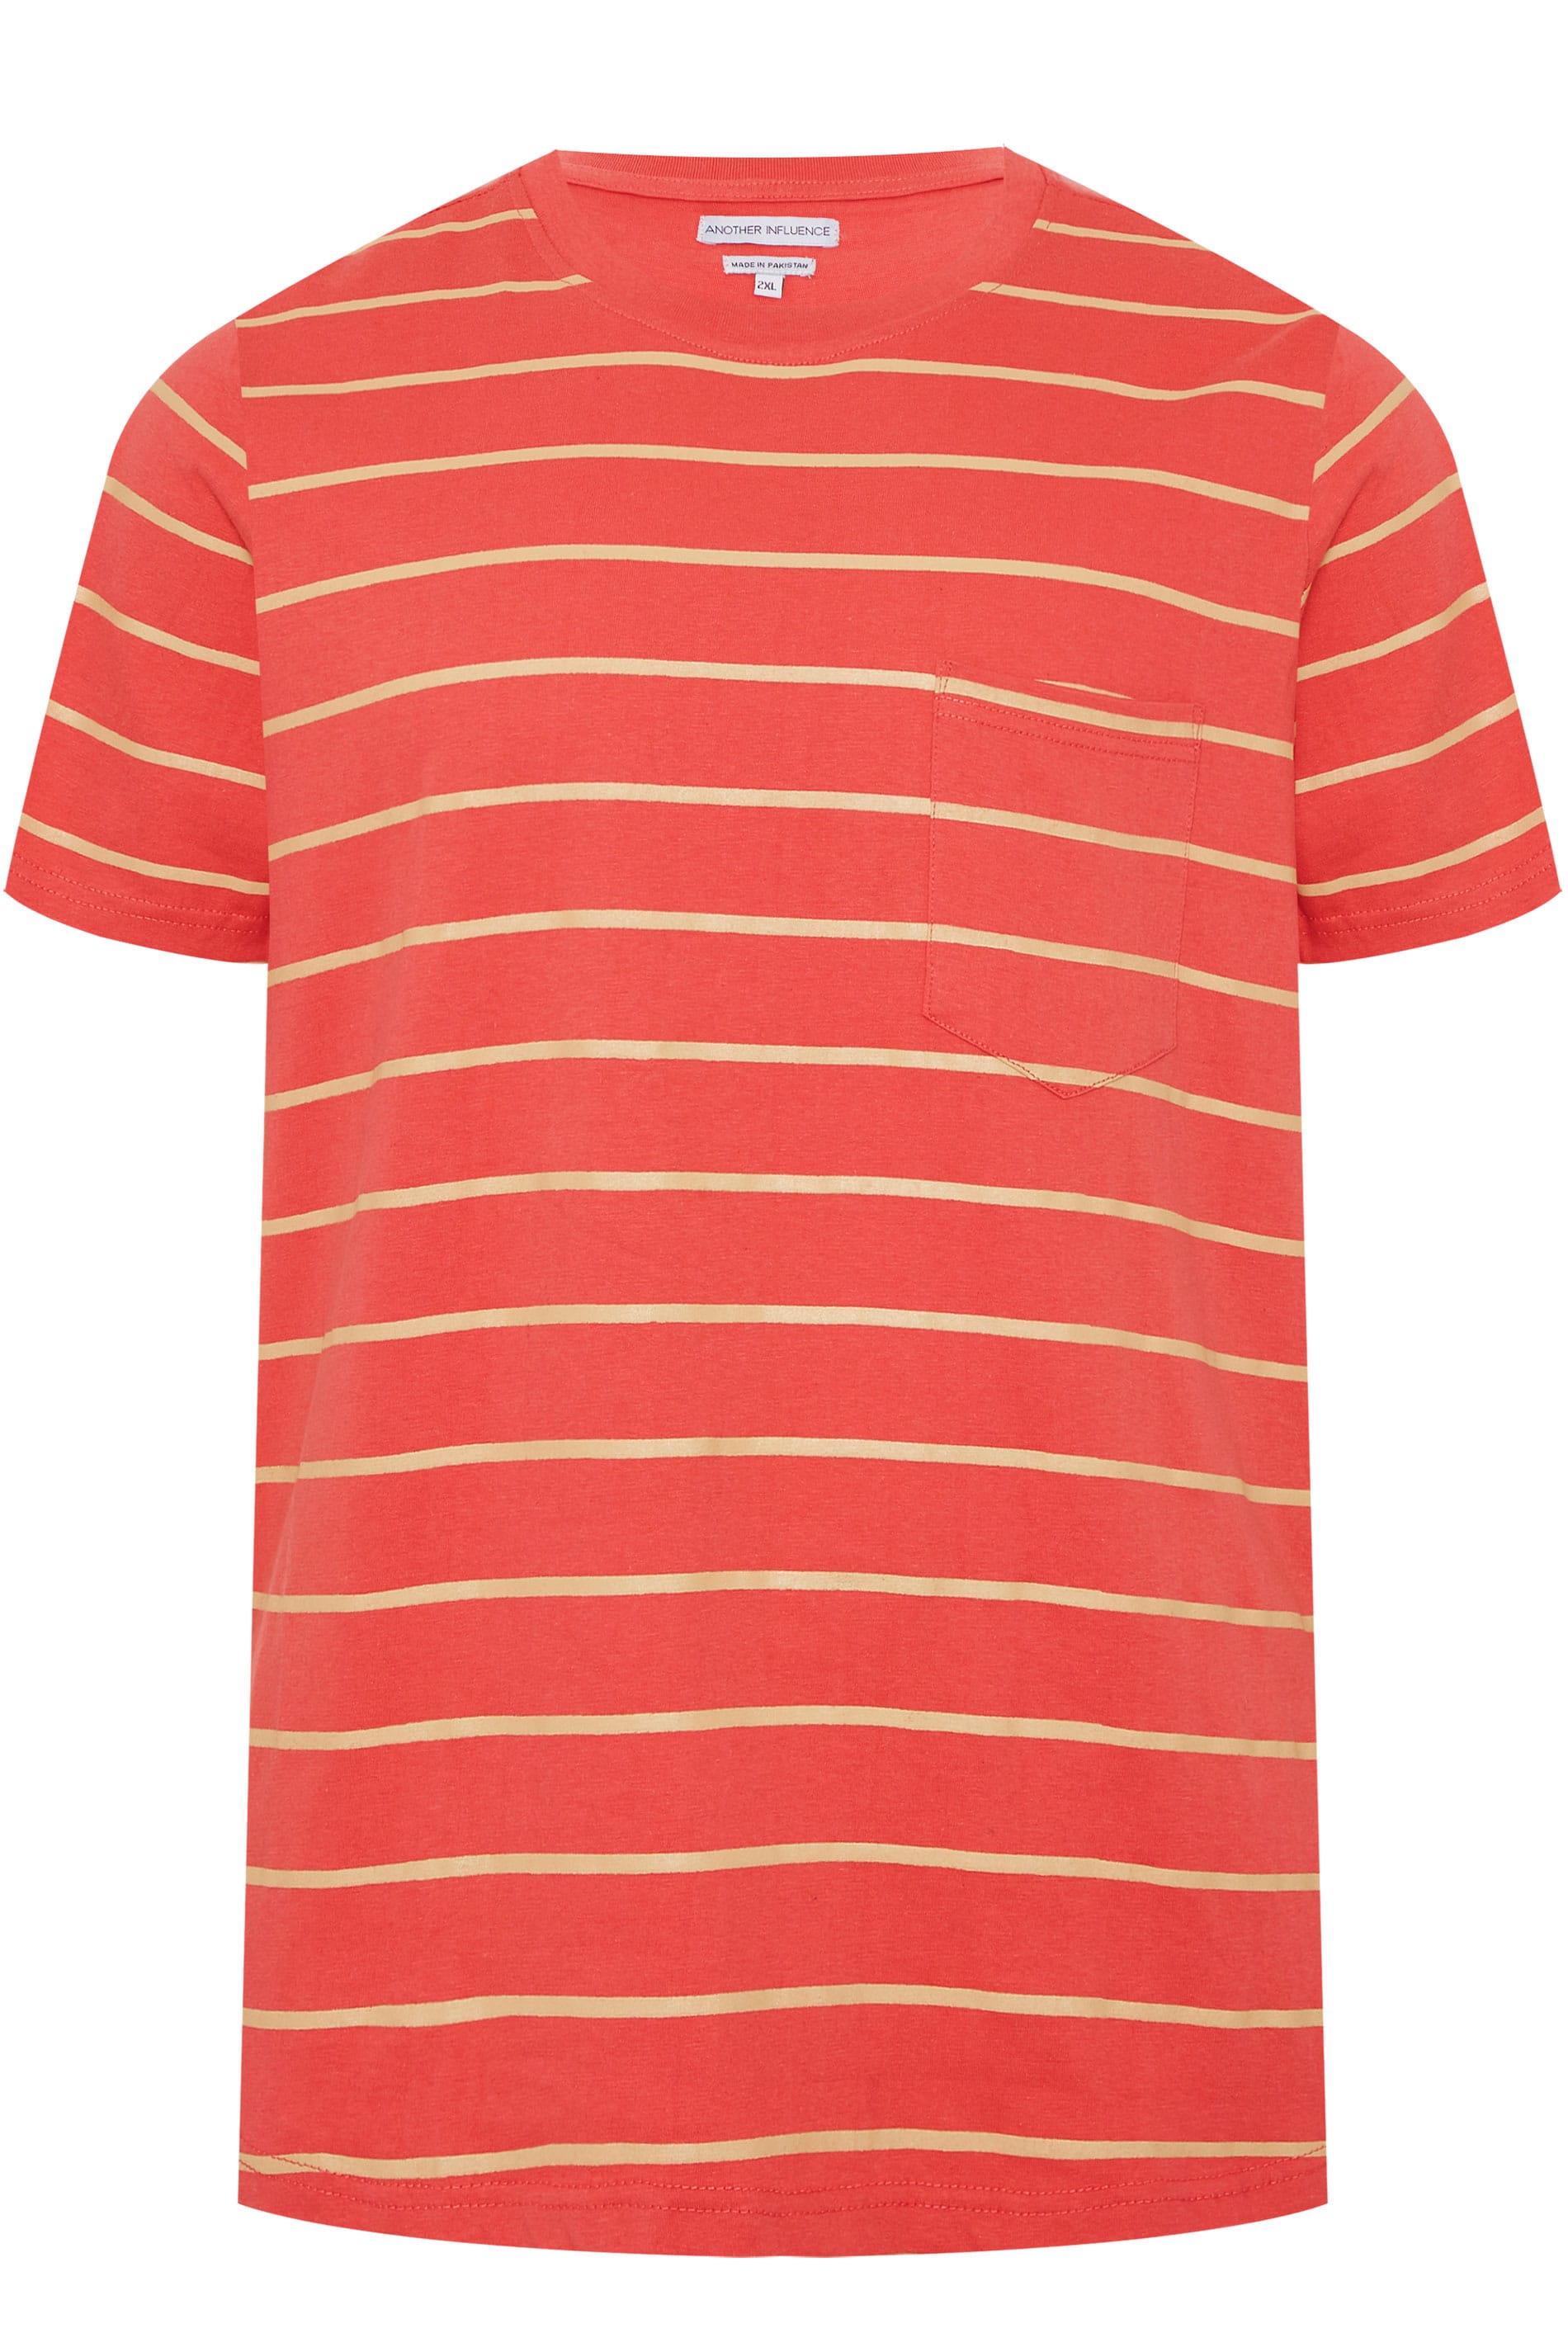 orange striped t shirt